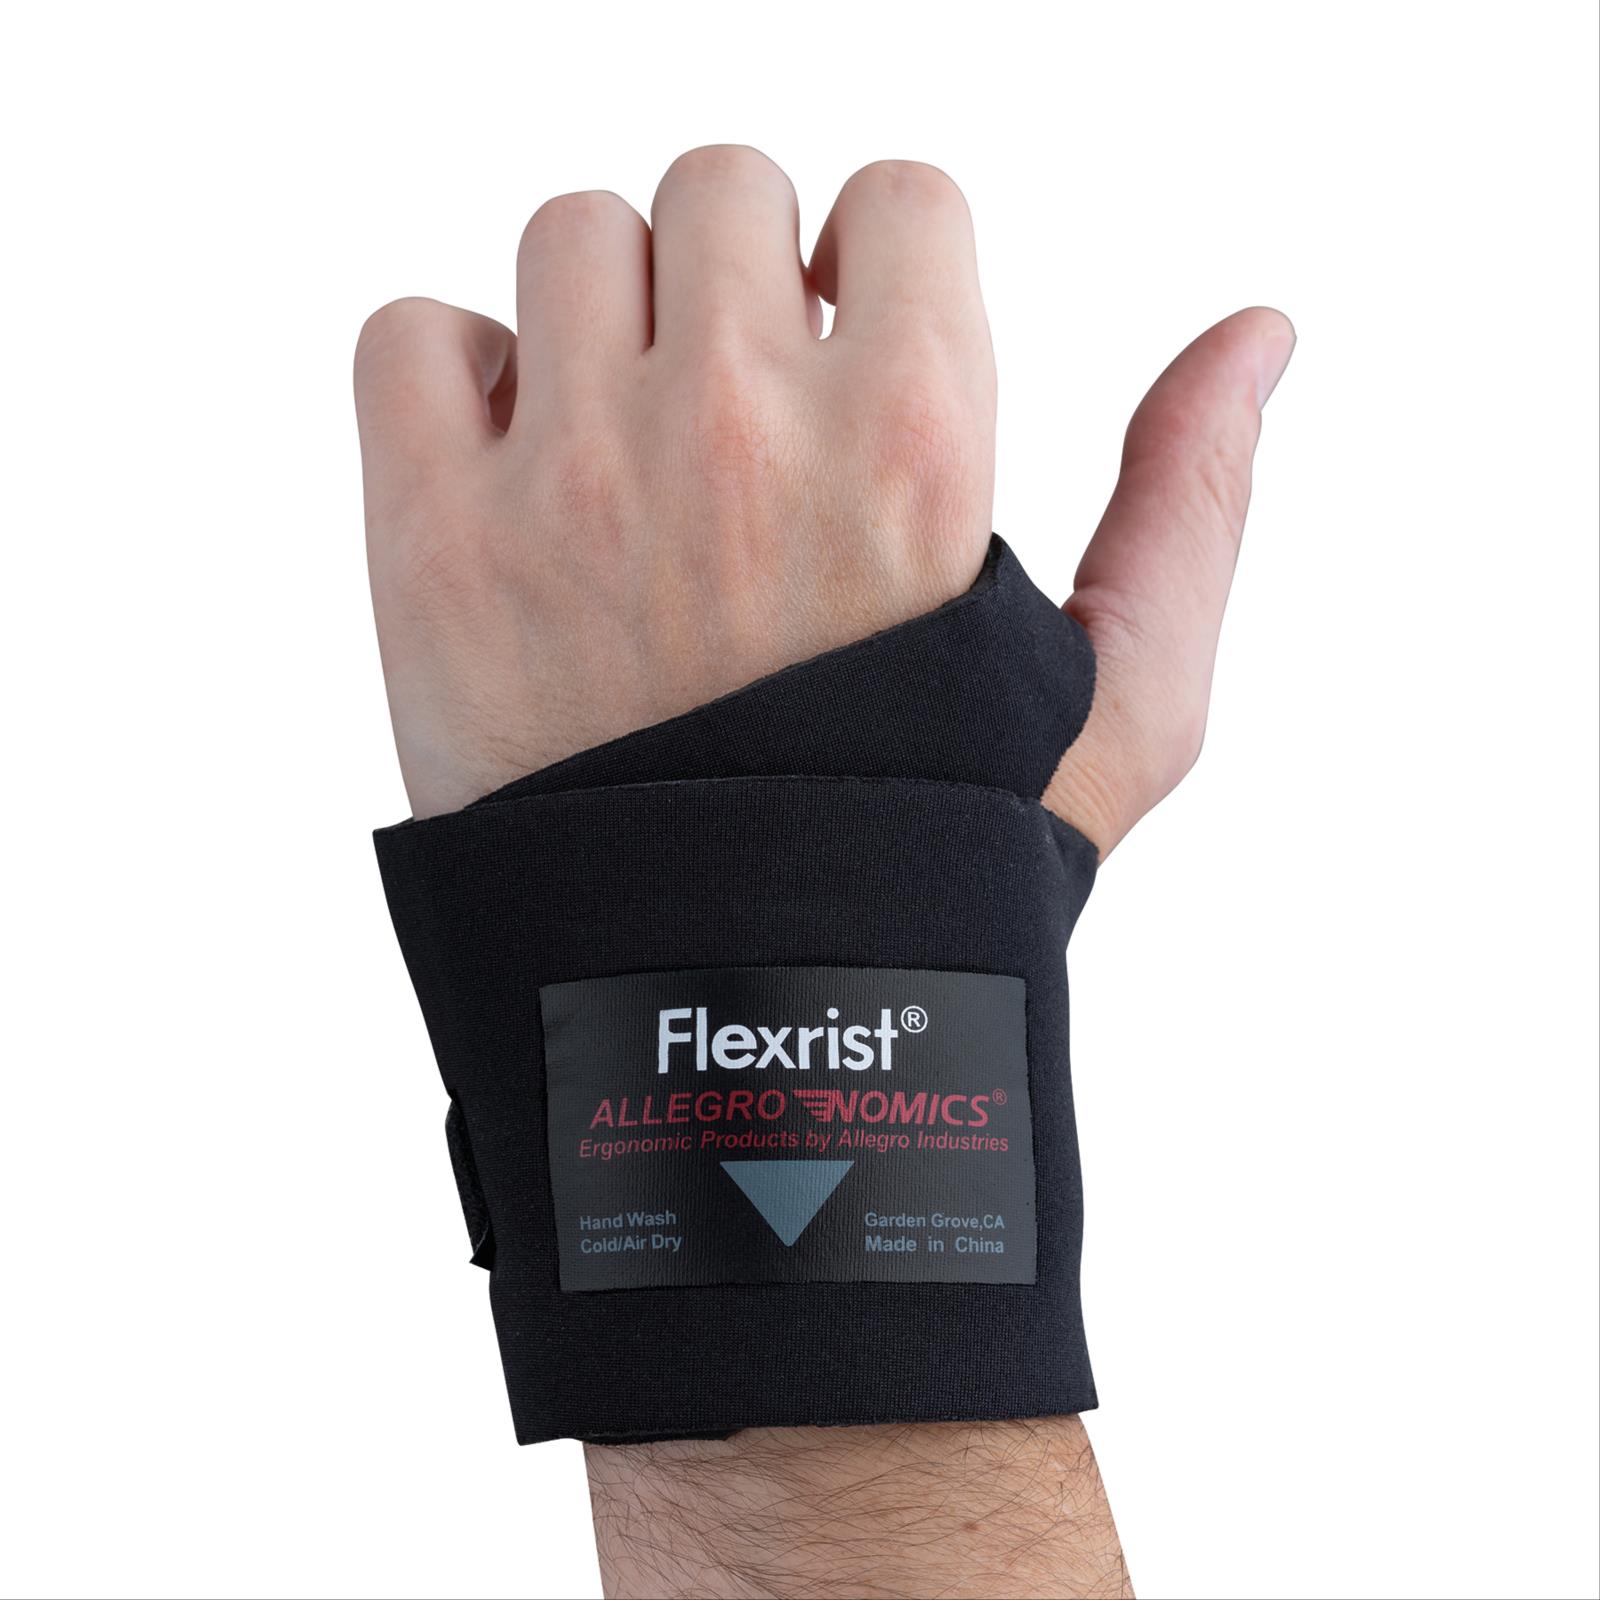 The FlexRist®